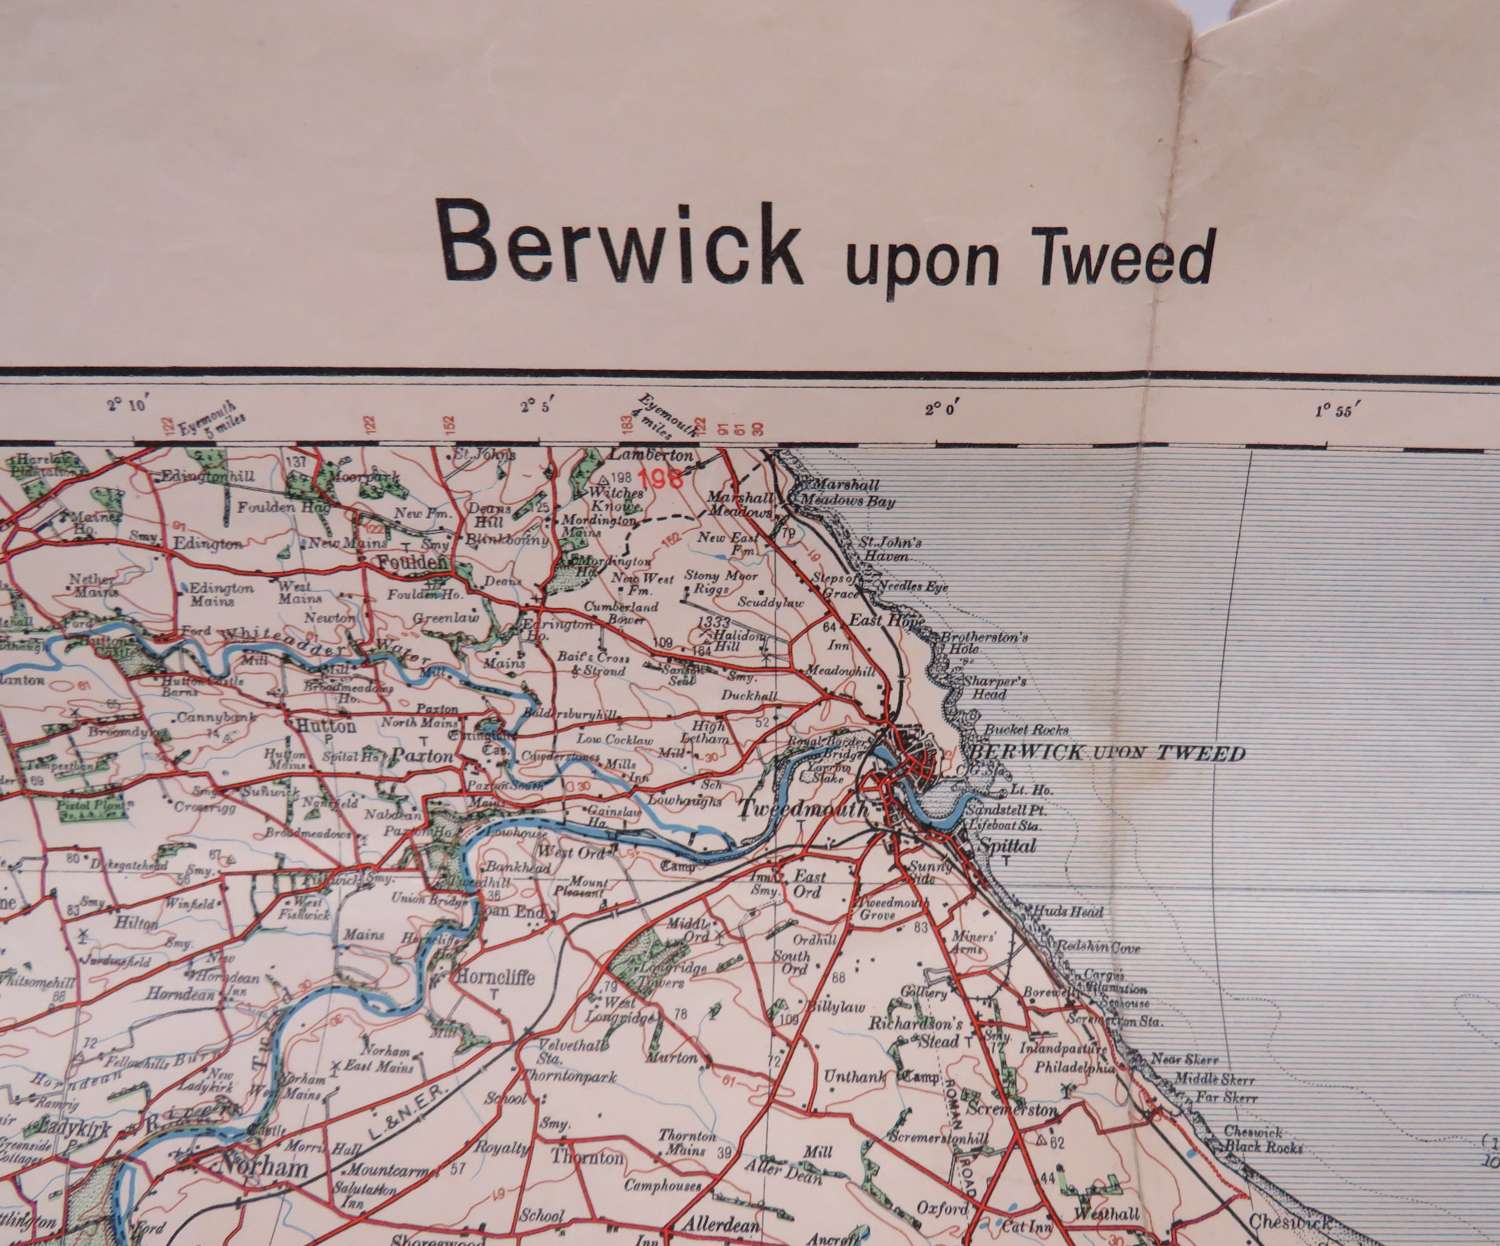 WW 2 German Invasion Map of Berwick upon Tweed